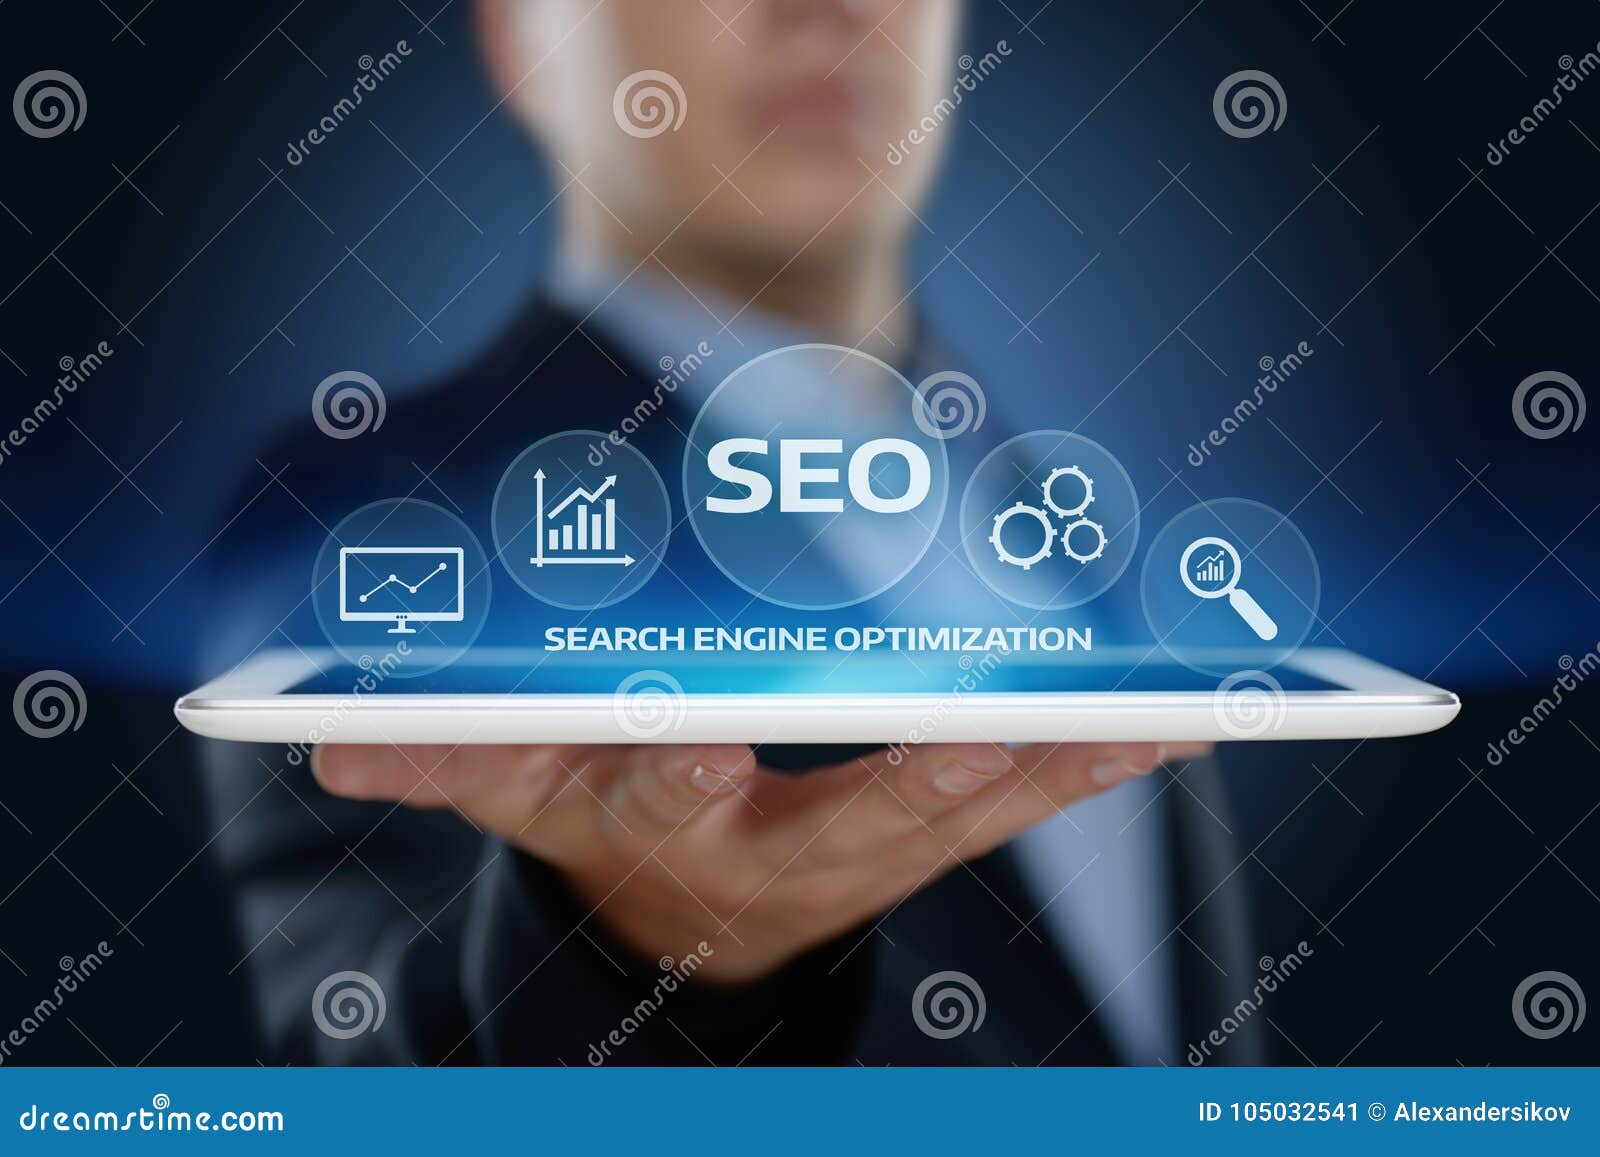 seo search engine optimization marketing ranking traffic website internet business technology concept